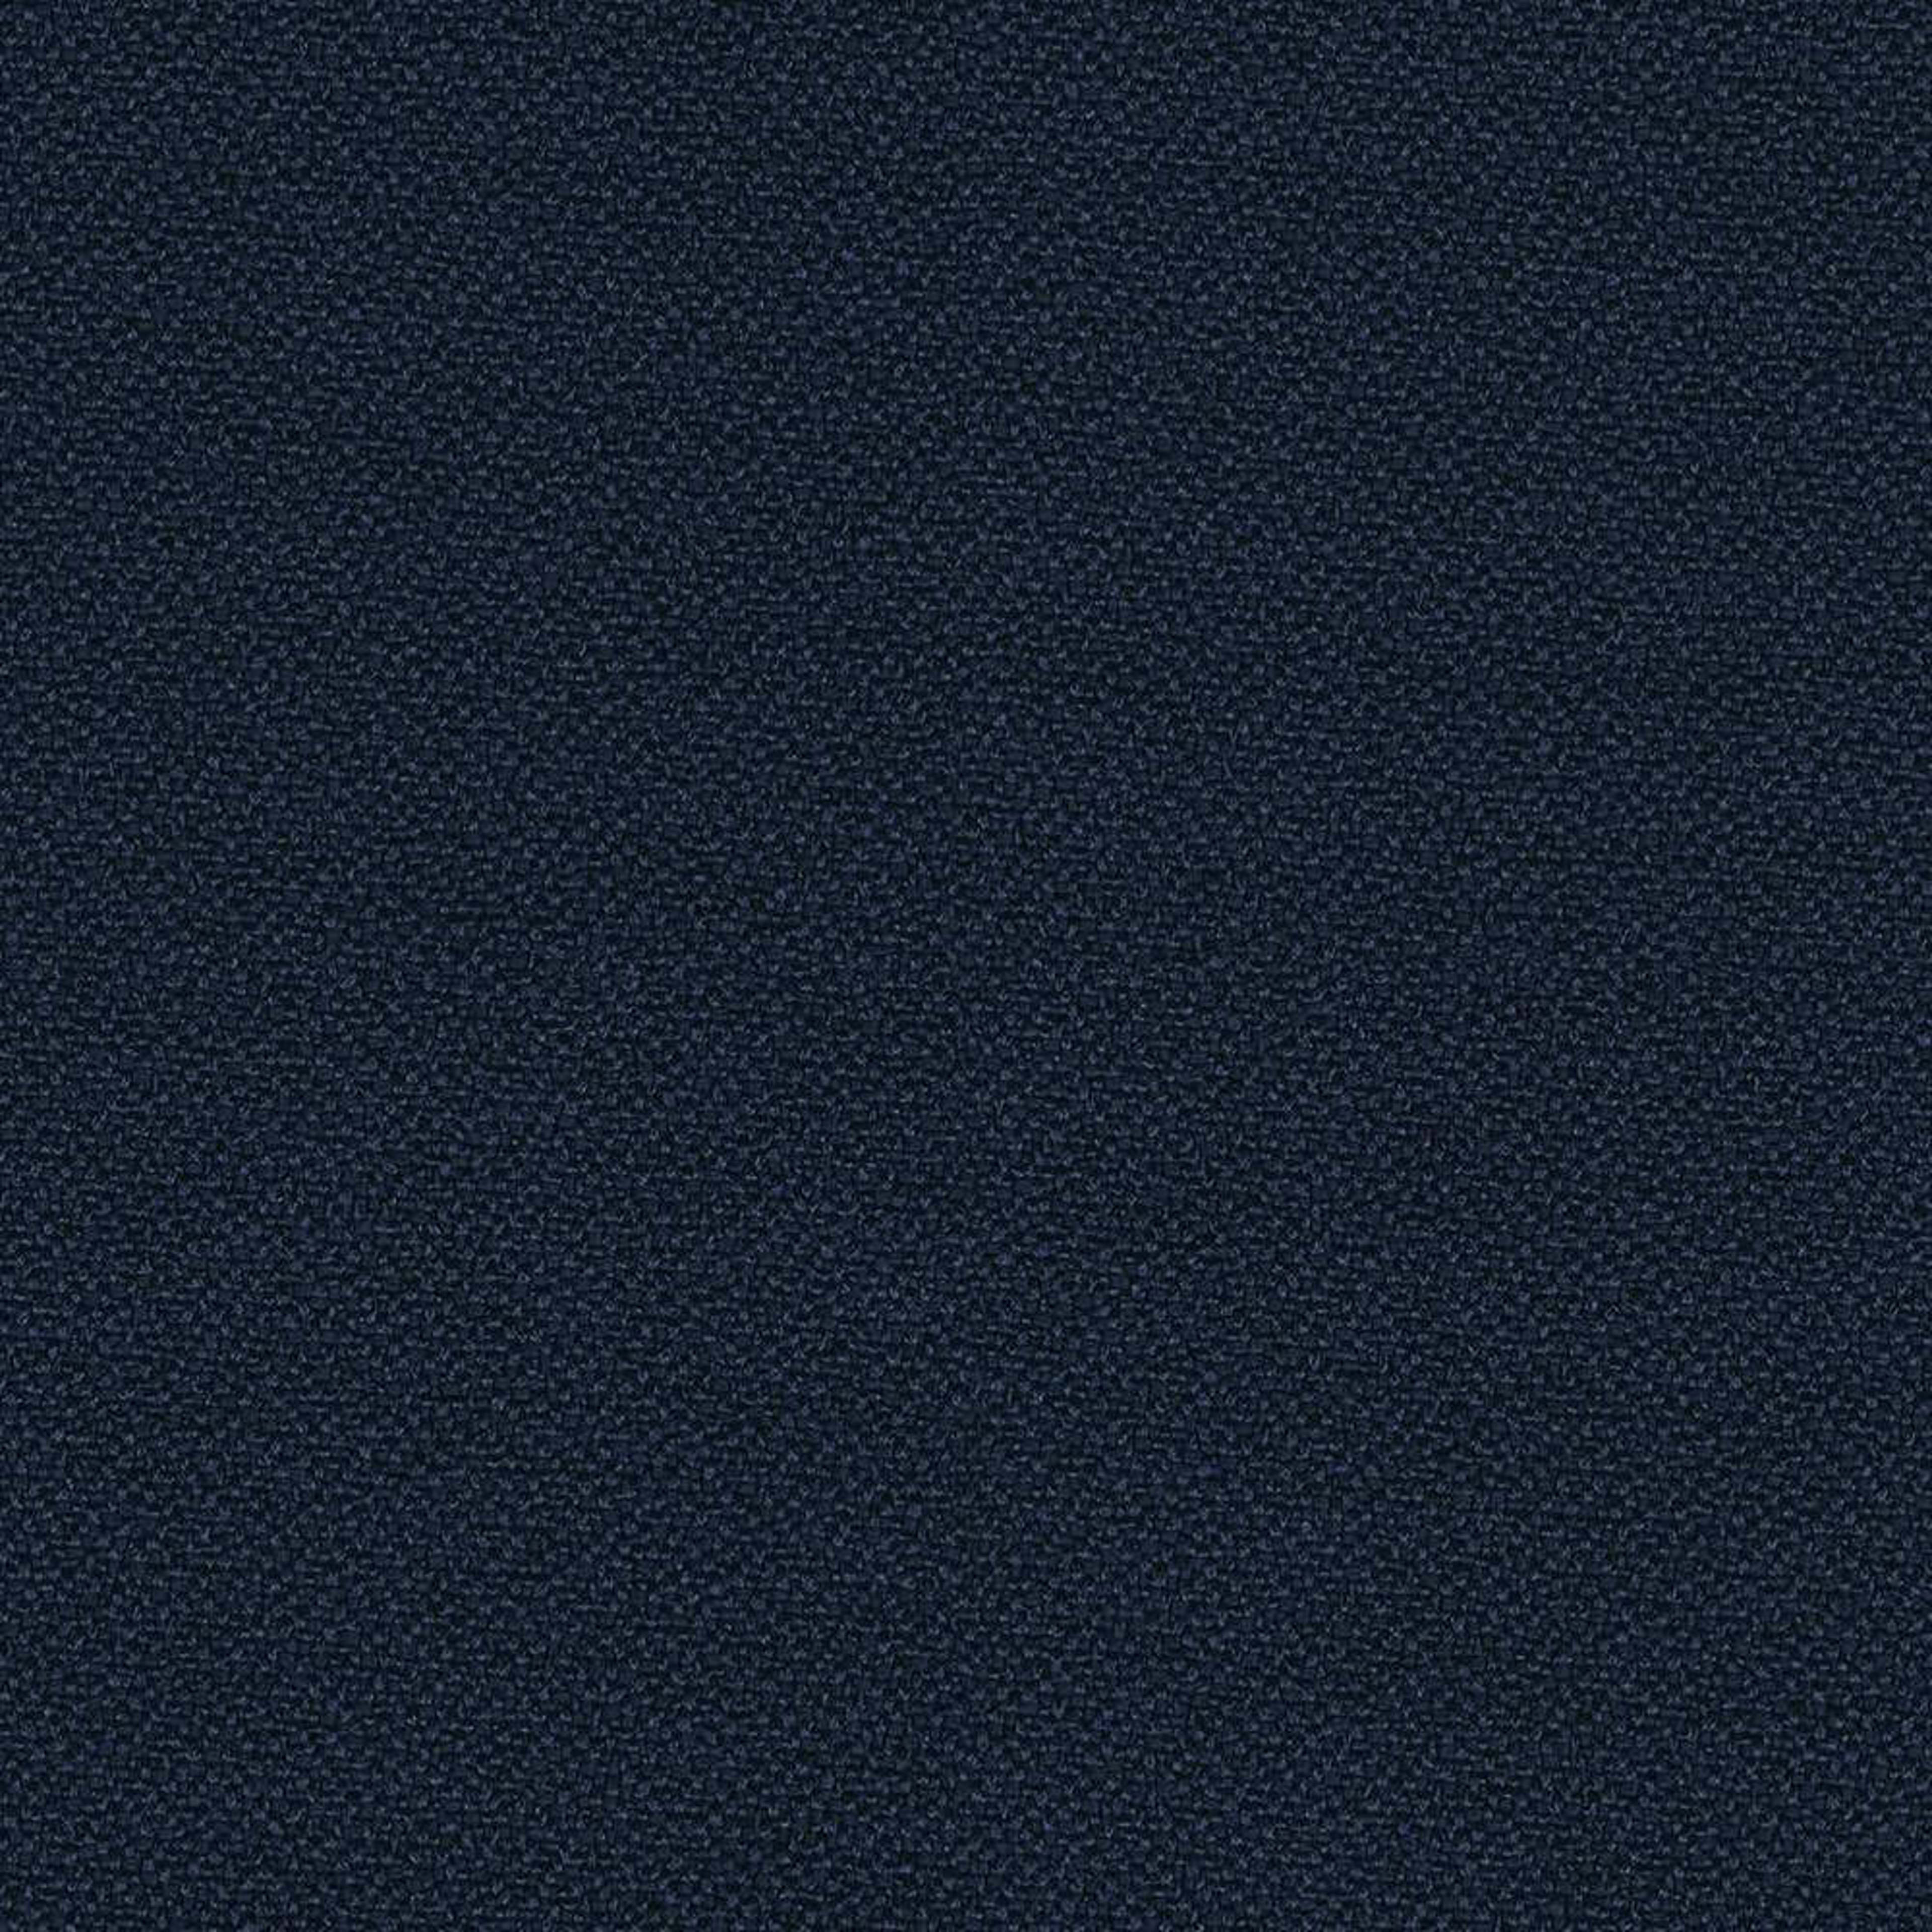 Phenix camisole - blue and grey black Brume/Ardoise Phénix silk